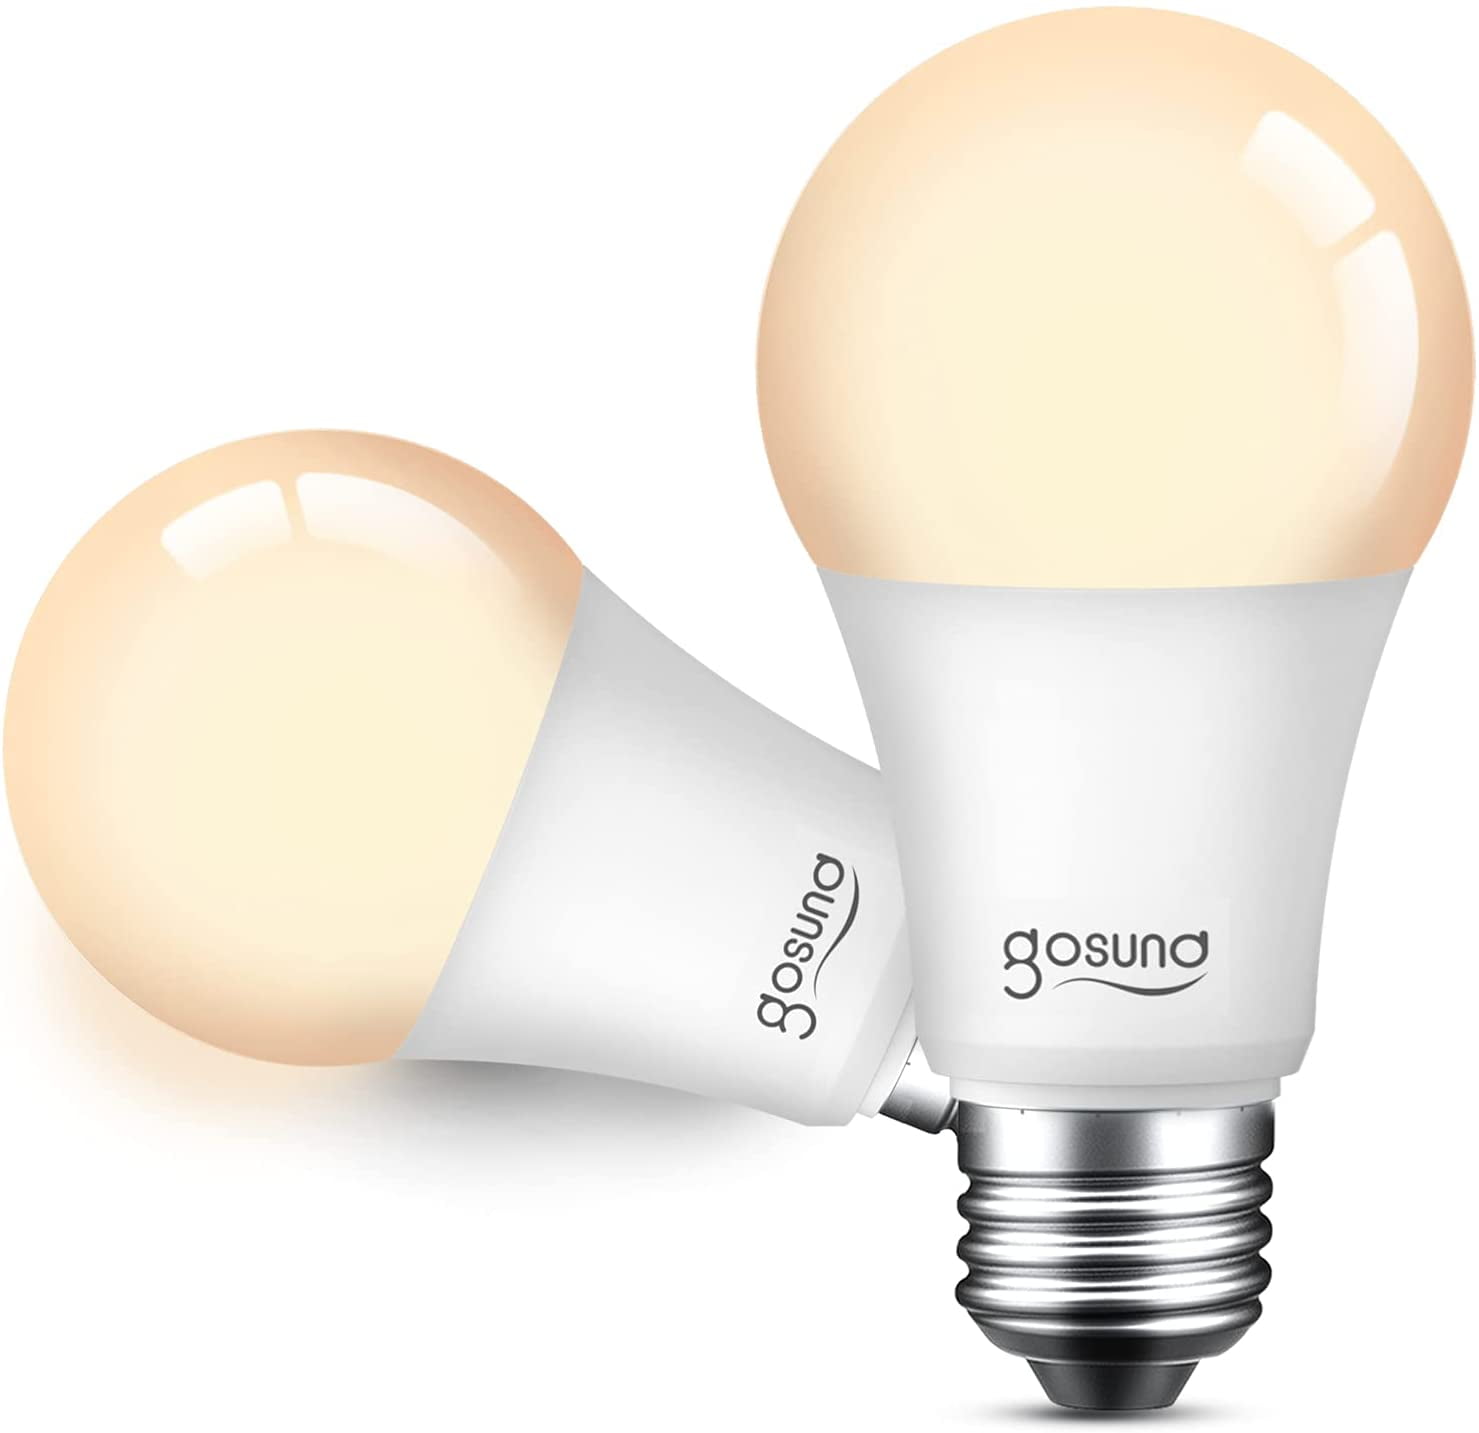 Gosund Smart LED Light Bulb E26 A19 Works with Alexa & Google Home 8W Warm White (2 - Walmart.com